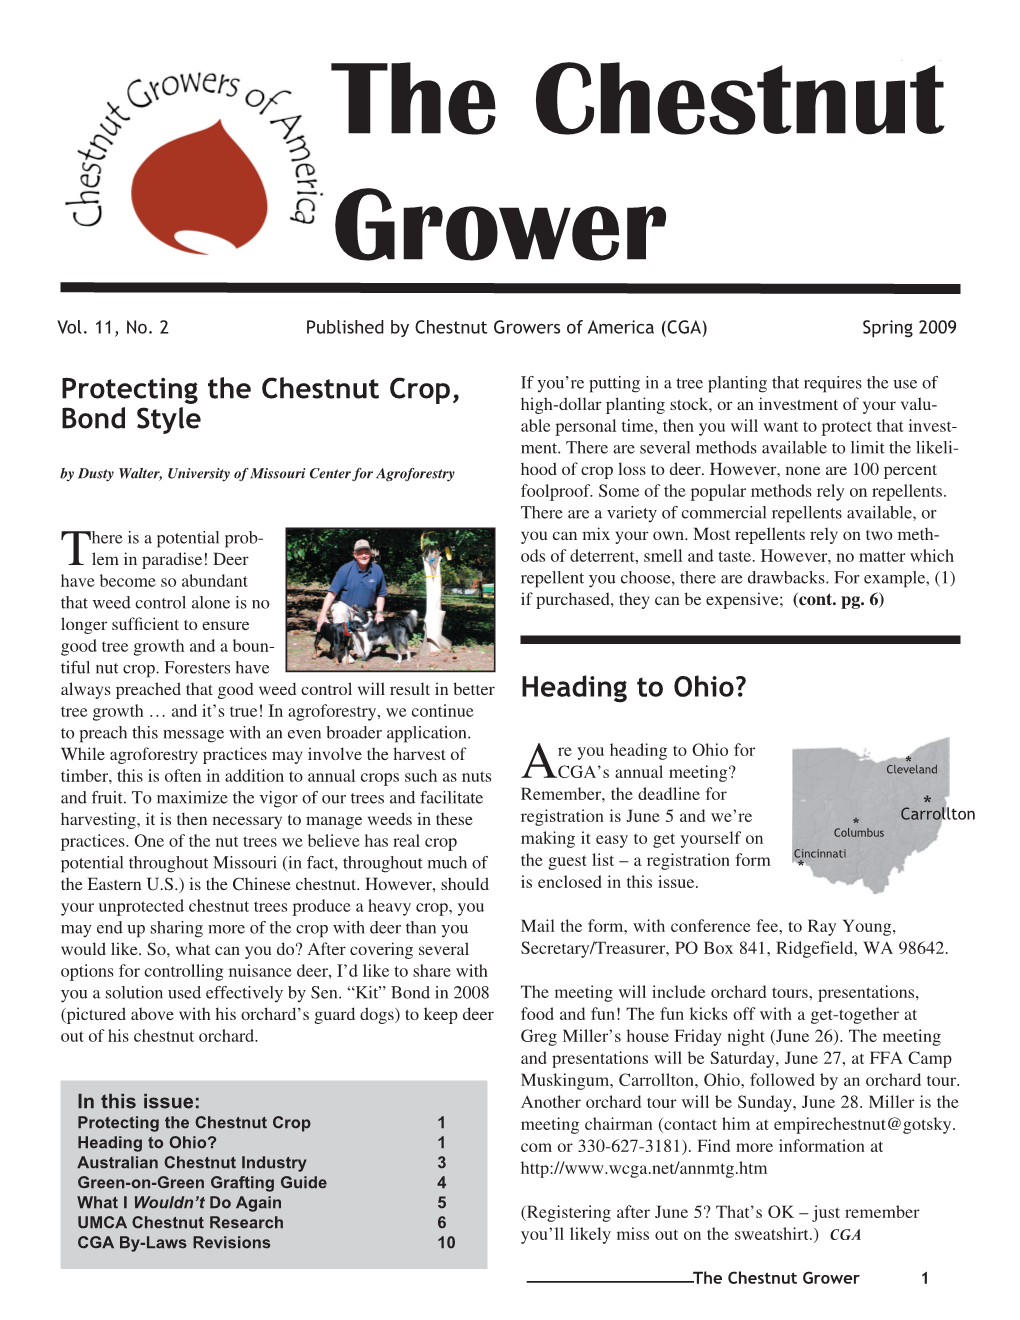 The Chestnut Grower